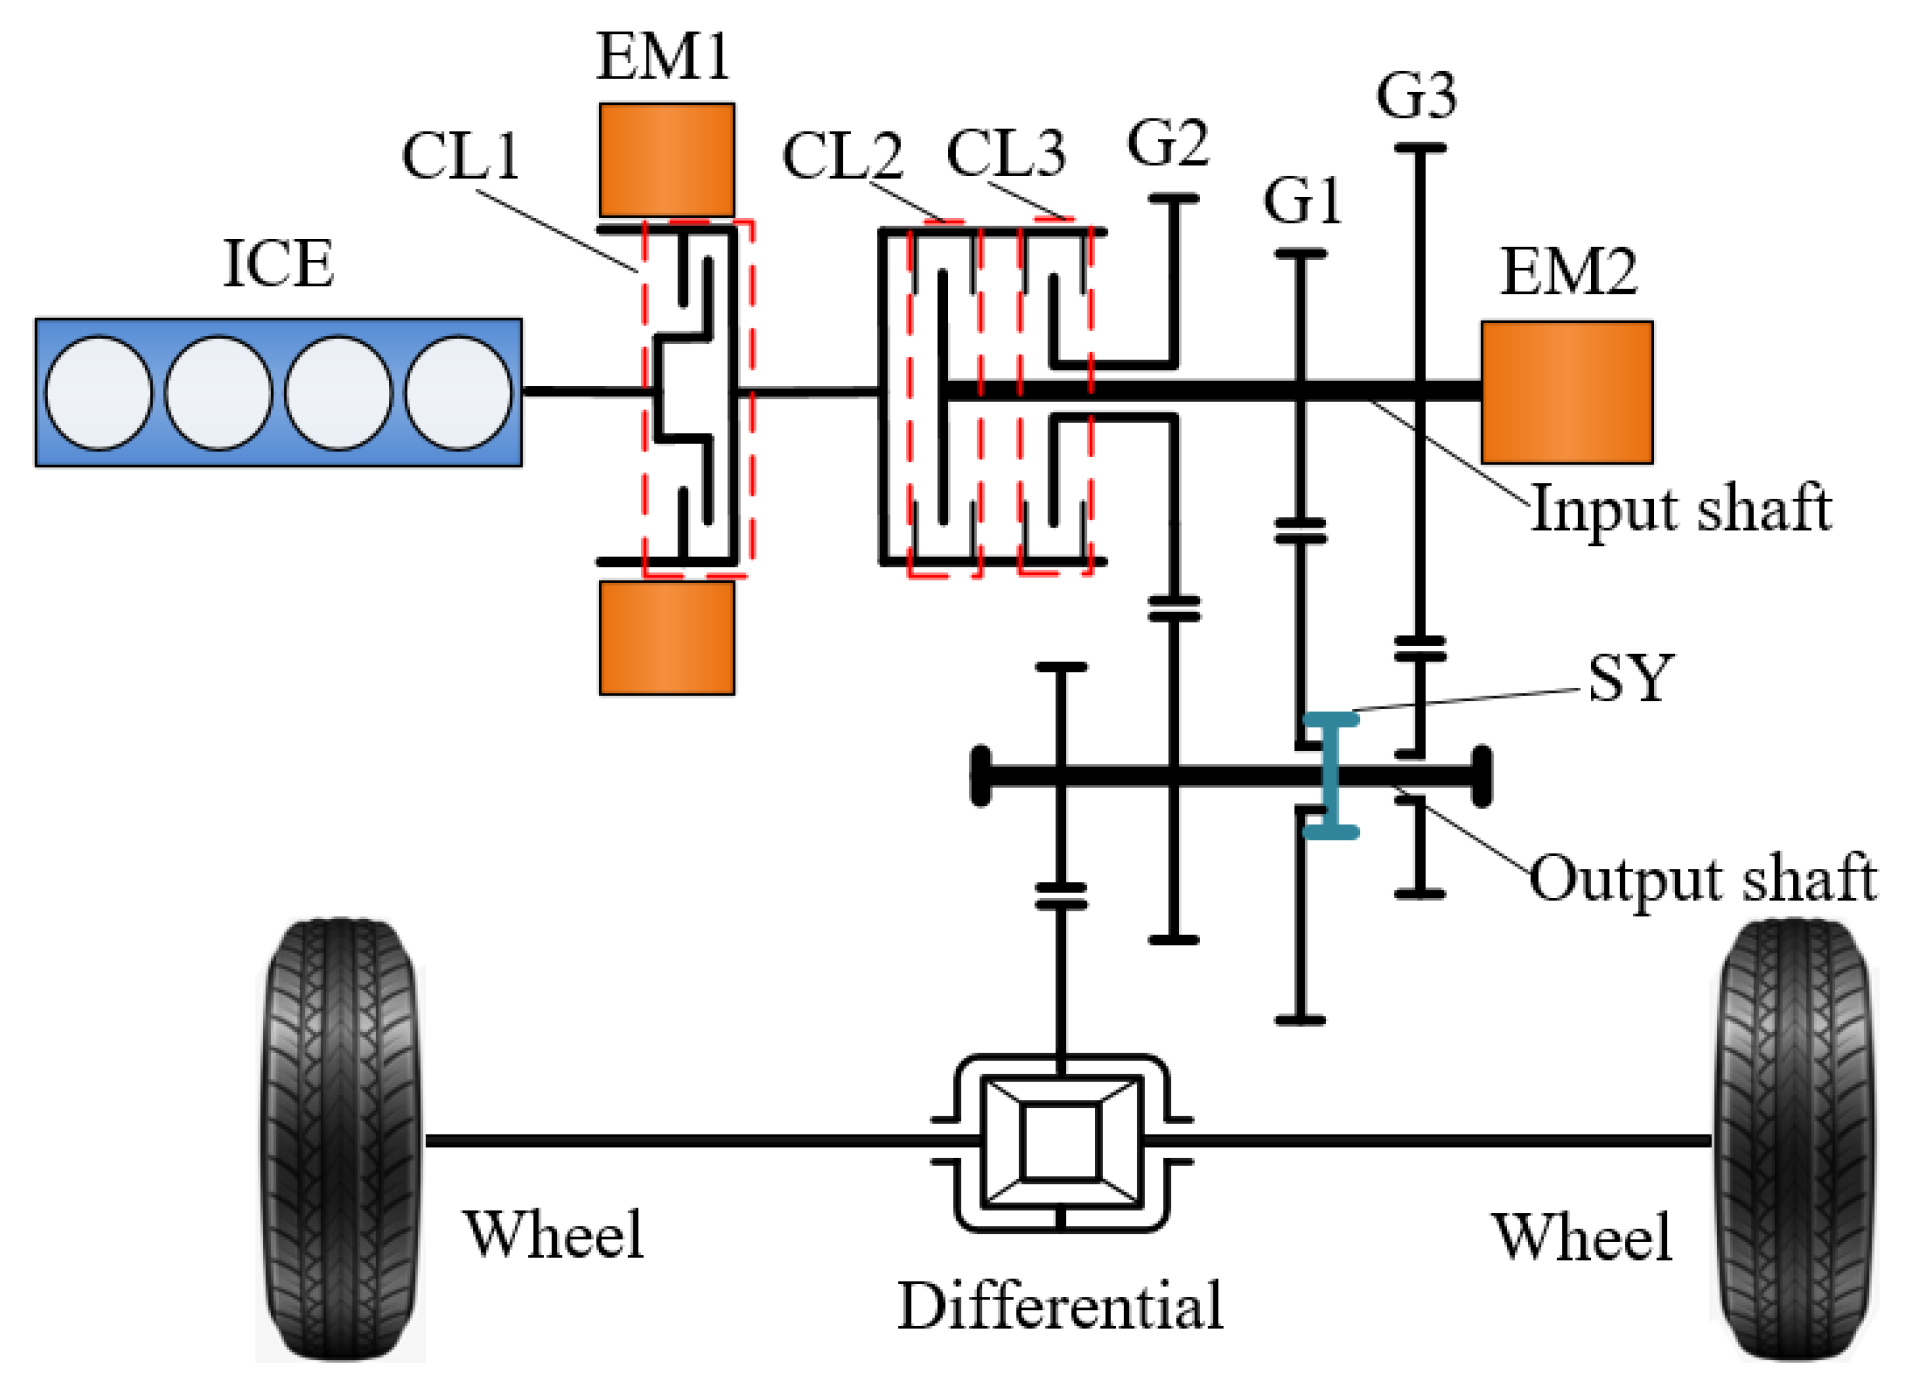 DE69233198T2 - Gear change control method for automatic vehicle